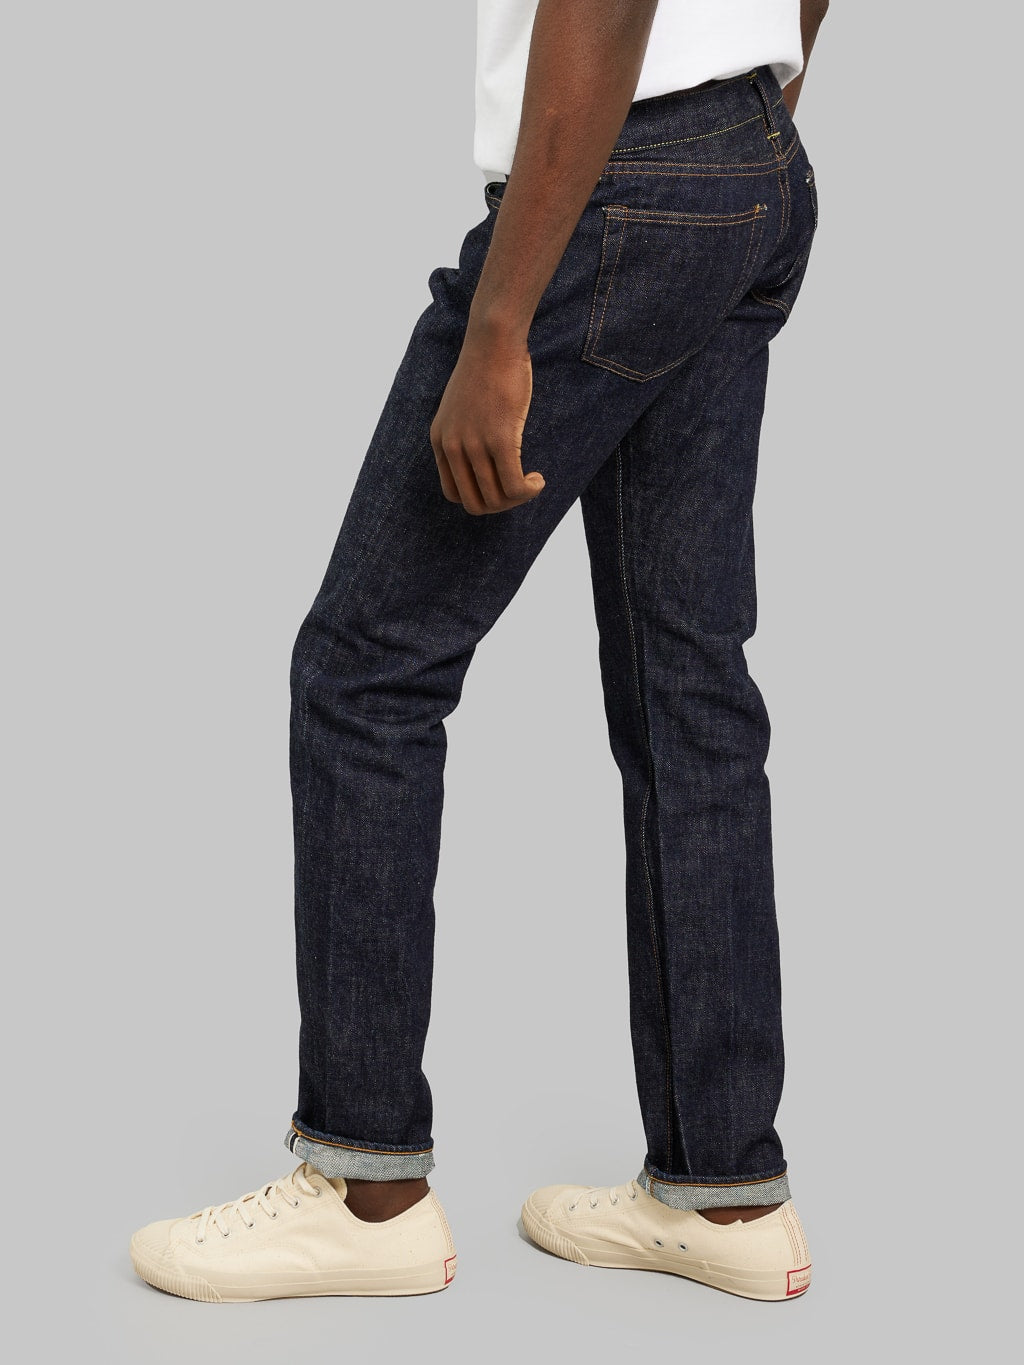 tcb jeans slim 50s selvedge japanese denim look